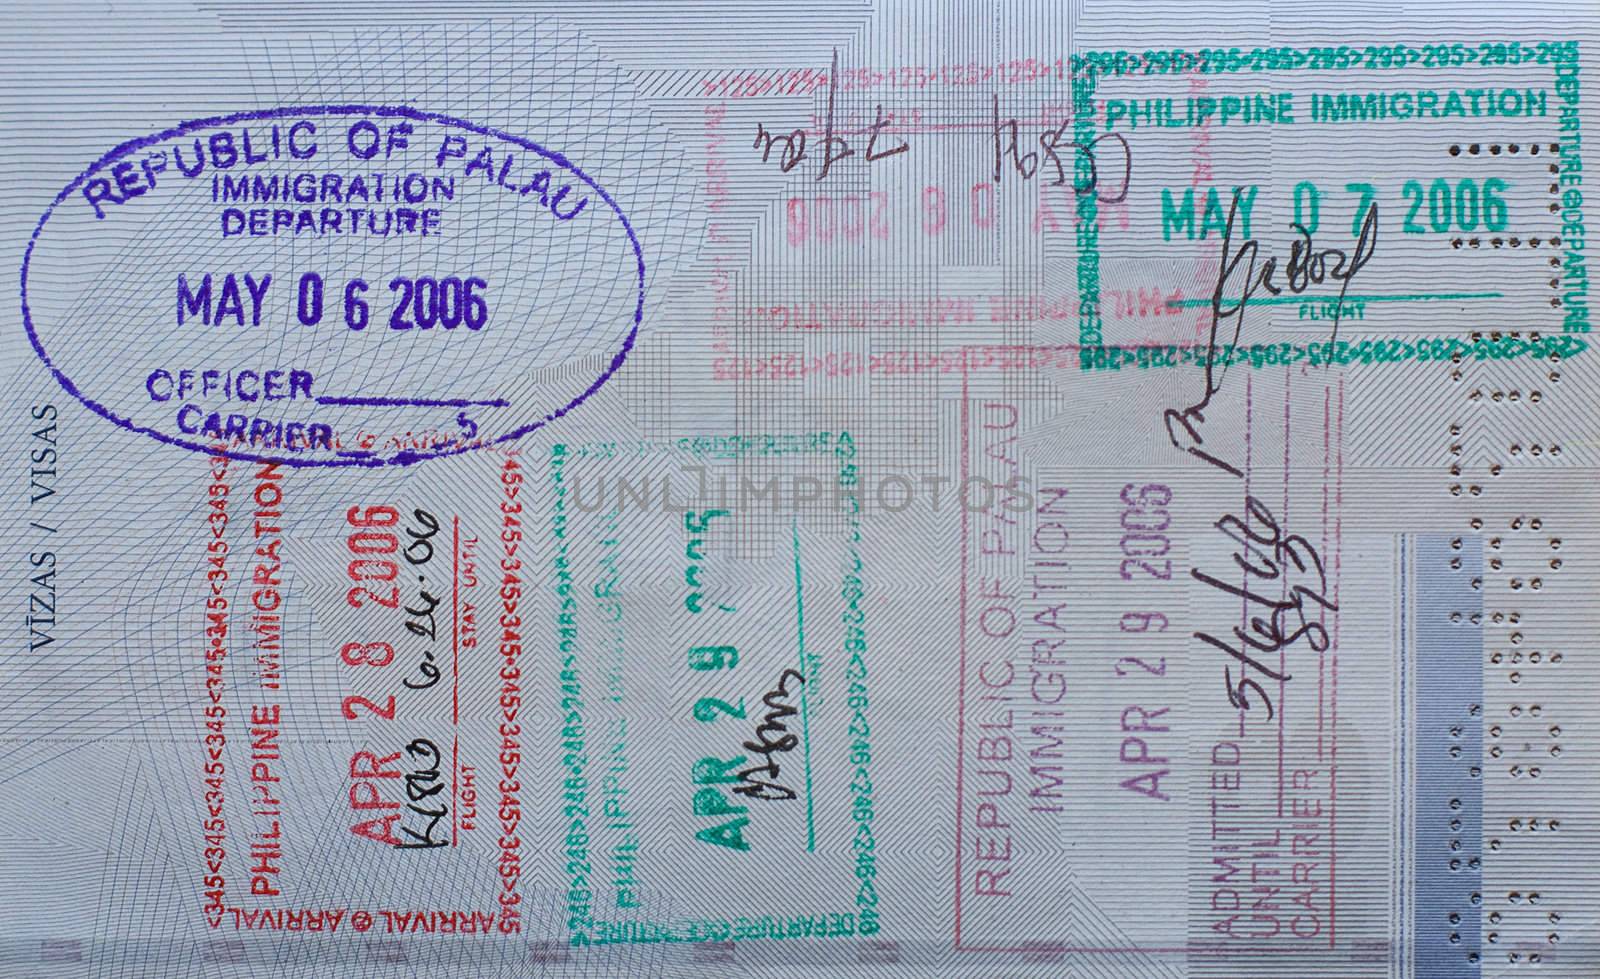 passport by desant7474